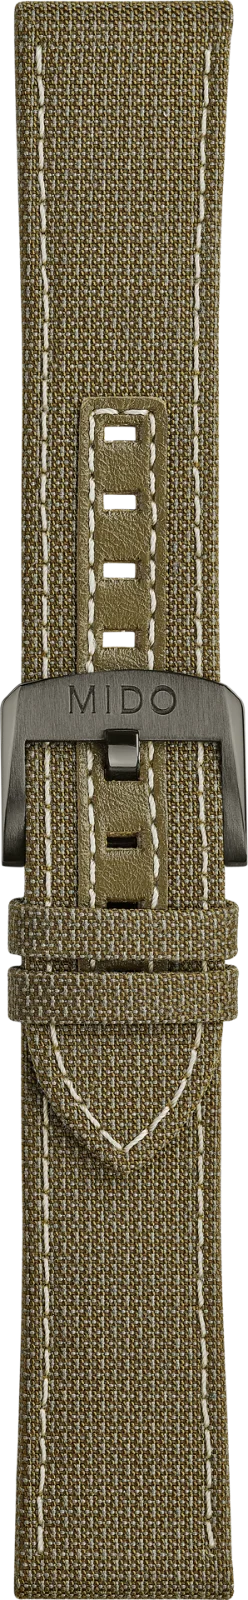 Mido Multifort grünes Kalbsleder-Armband